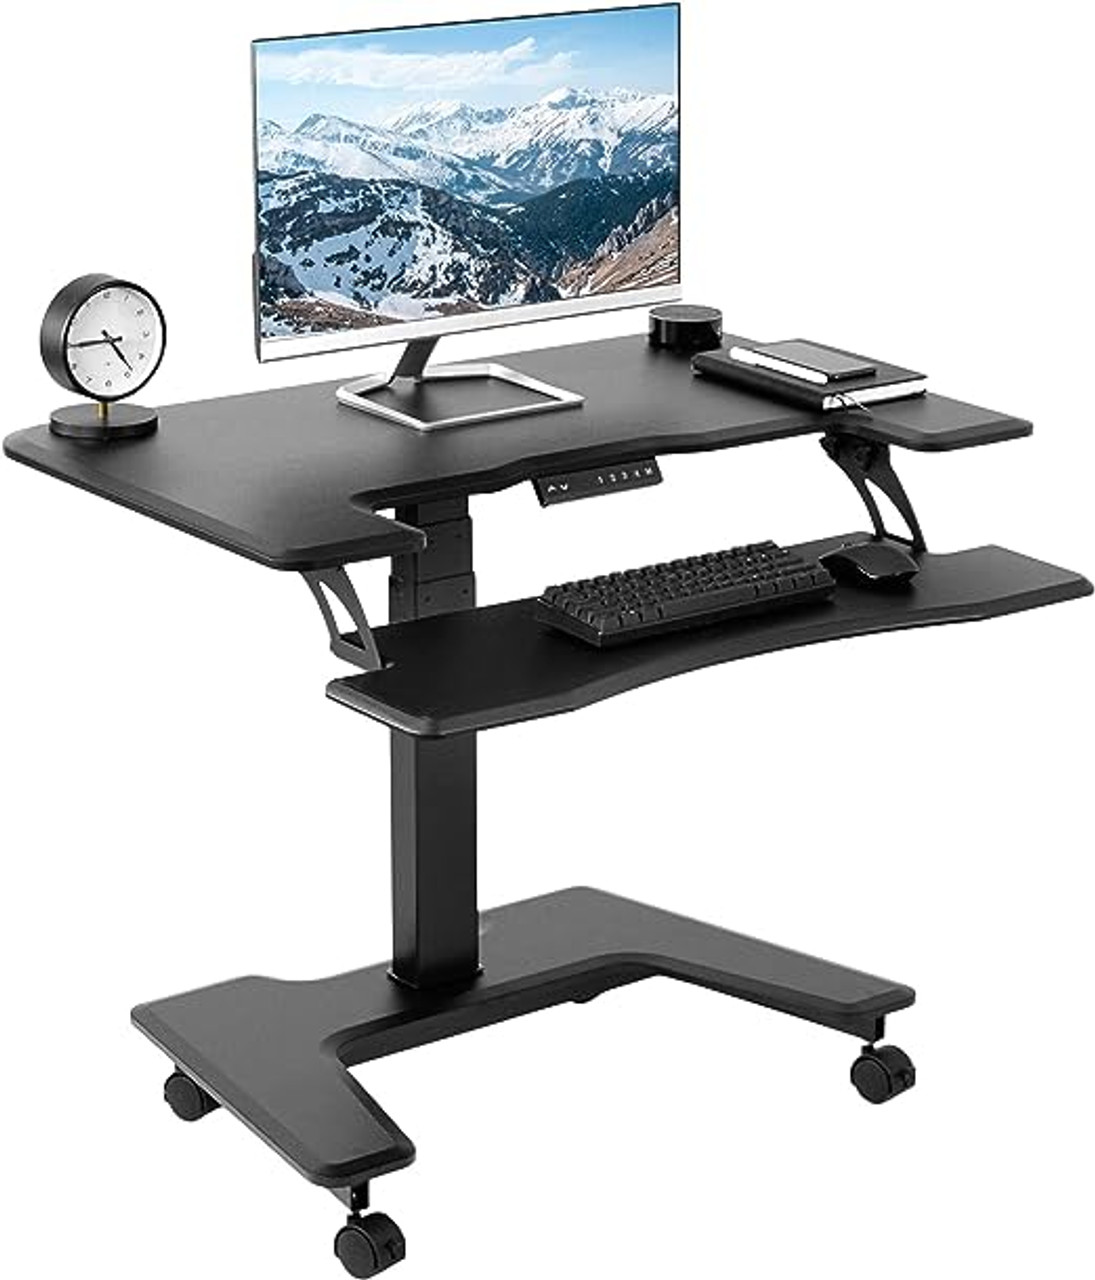 ModSavy Foldable Mobile Standing Desk, Pneumatic Height Adjustable